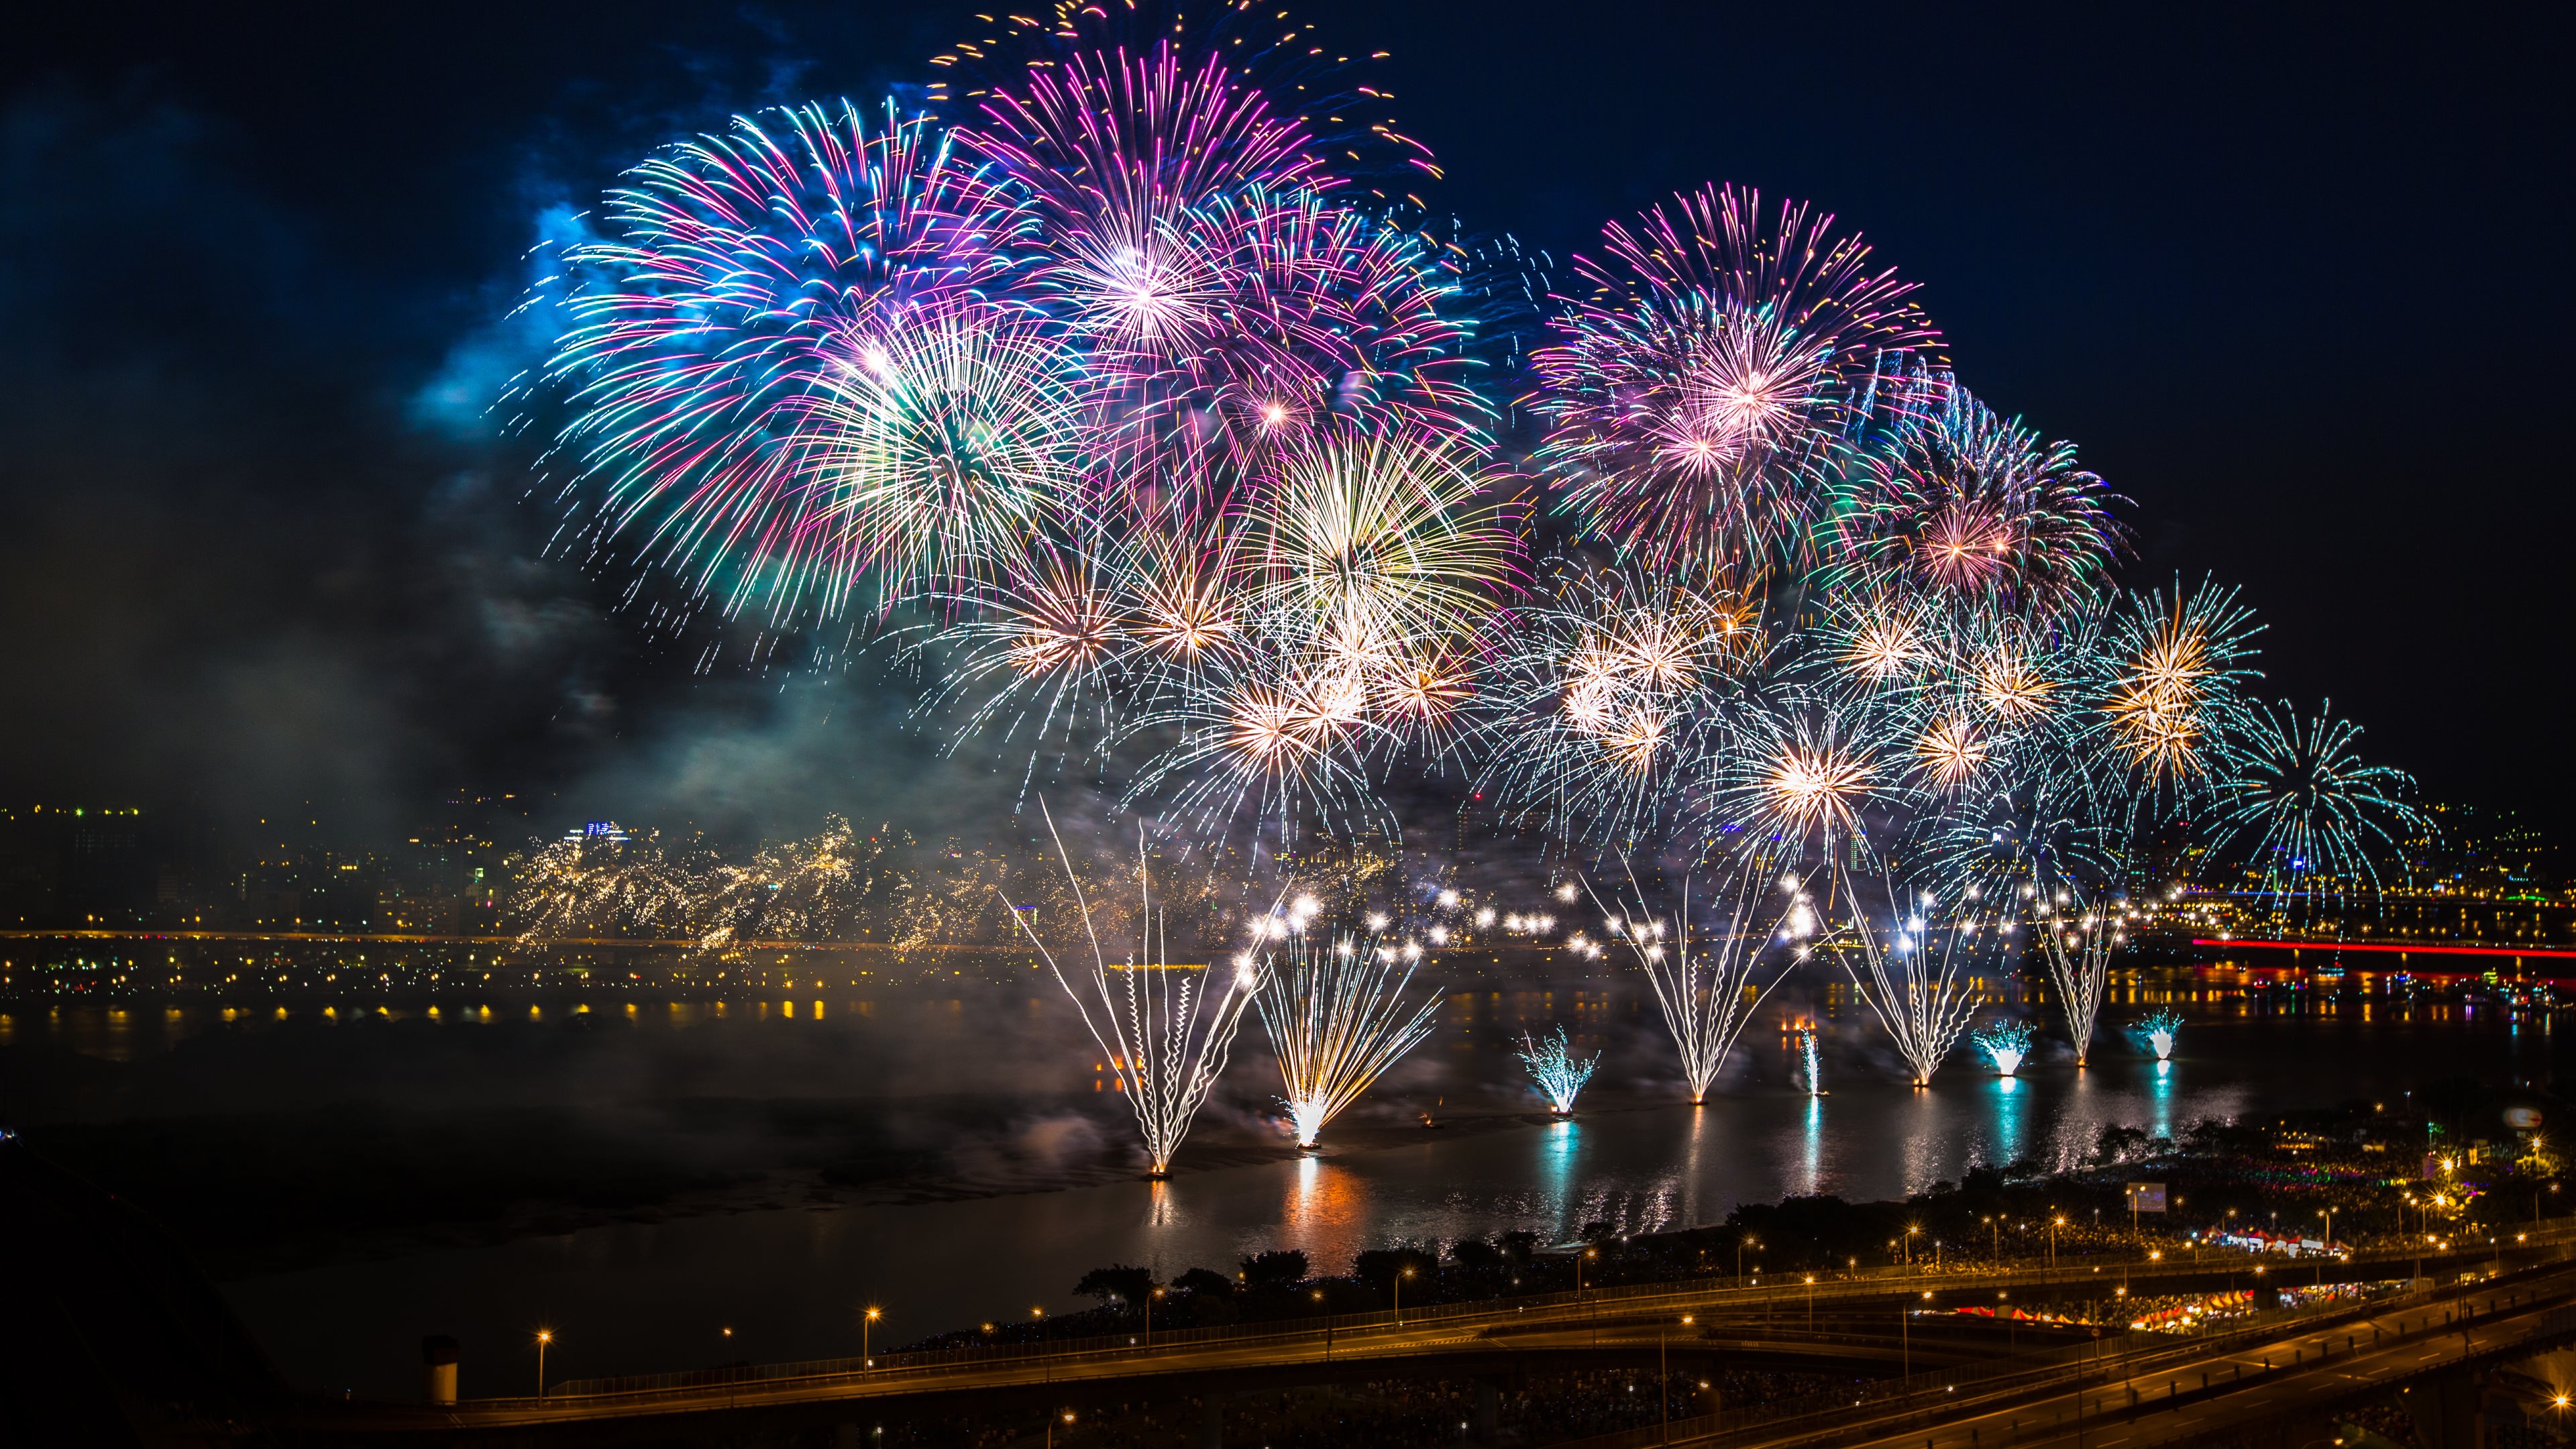 Fireworks HD Wallpaper - WallpaperSafari
 New Years Fireworks Wallpaper 2015